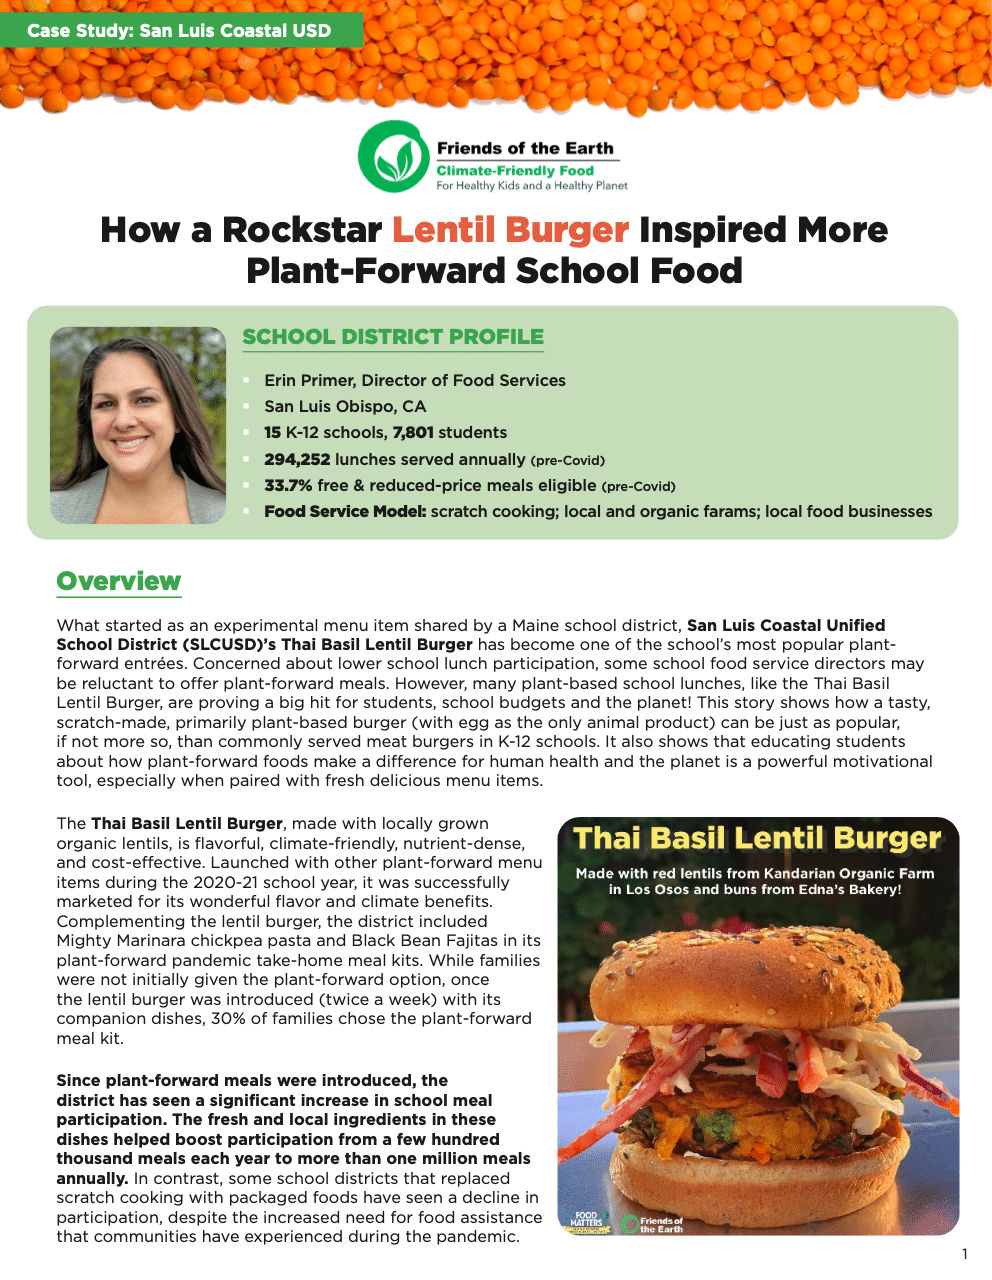 How a Rockstar Lentil Burger Inspired More Plant-Forward School Food